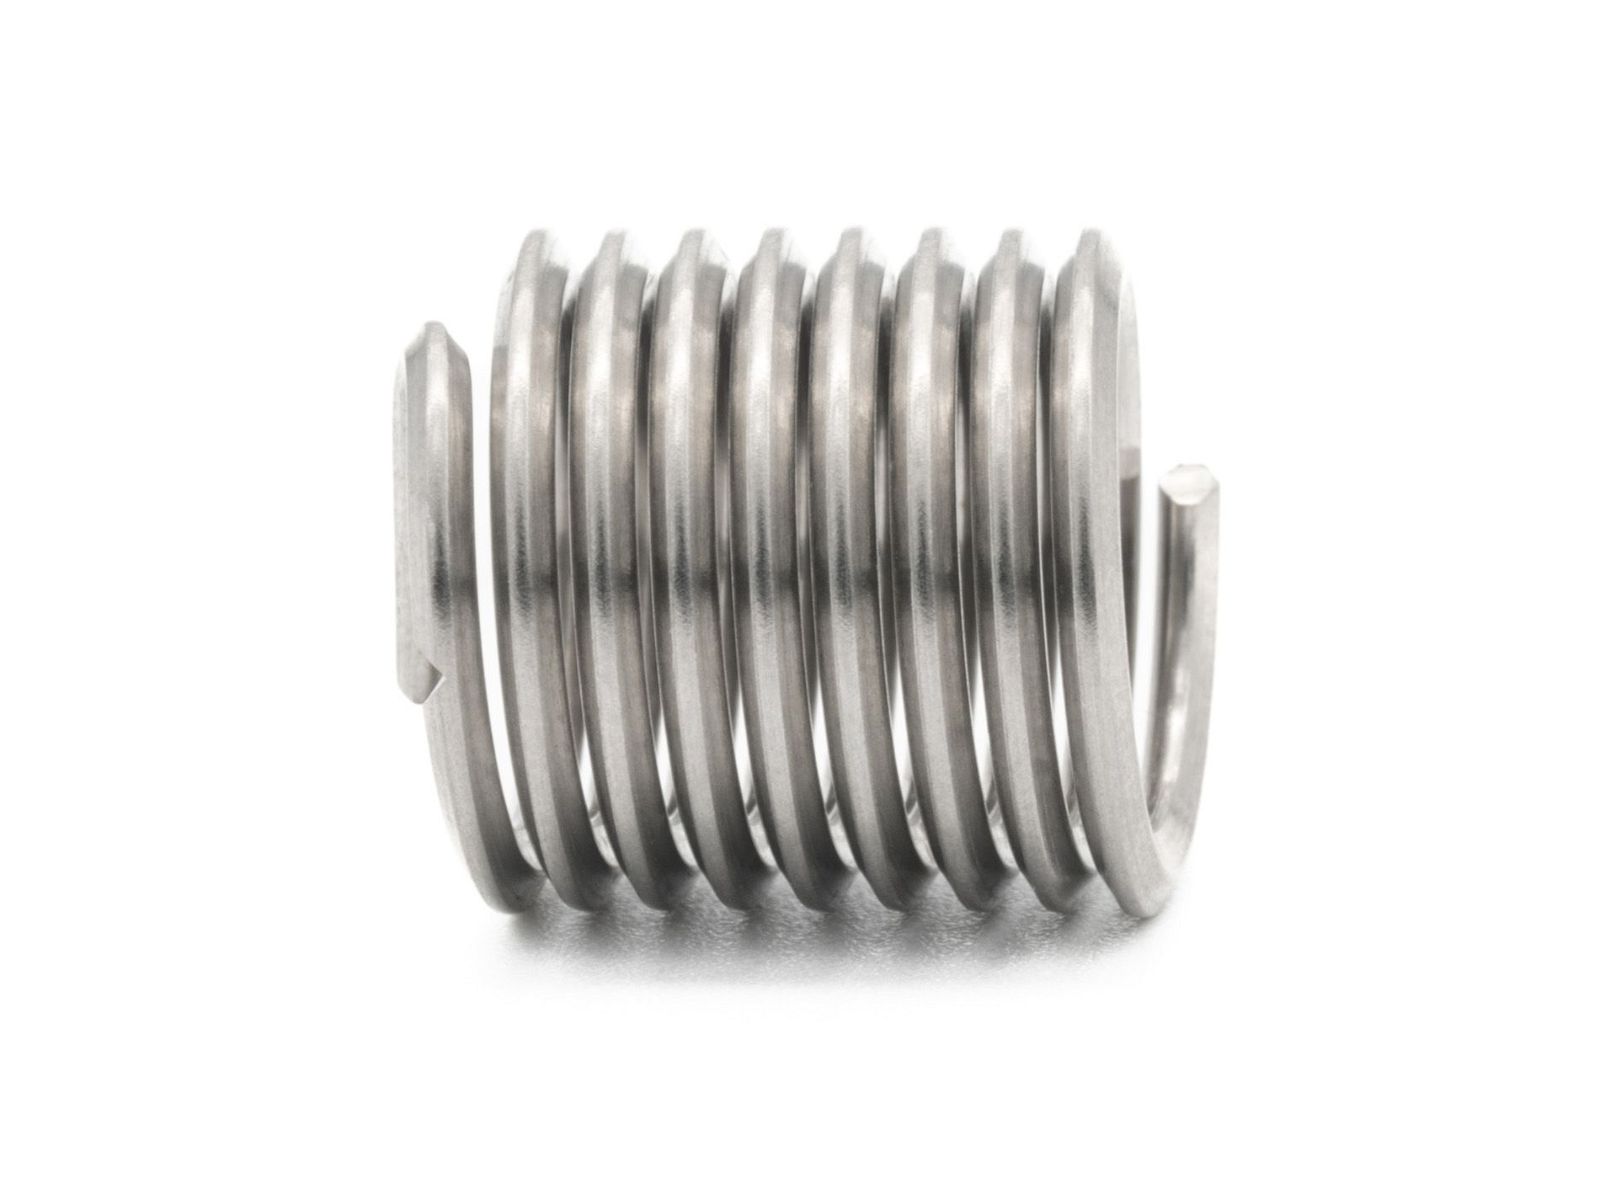 BaerCoil Wire Thread Inserts UNC No. 5 x 40 - 1.5 D (4.76 mm) - free running - 10 pcs.